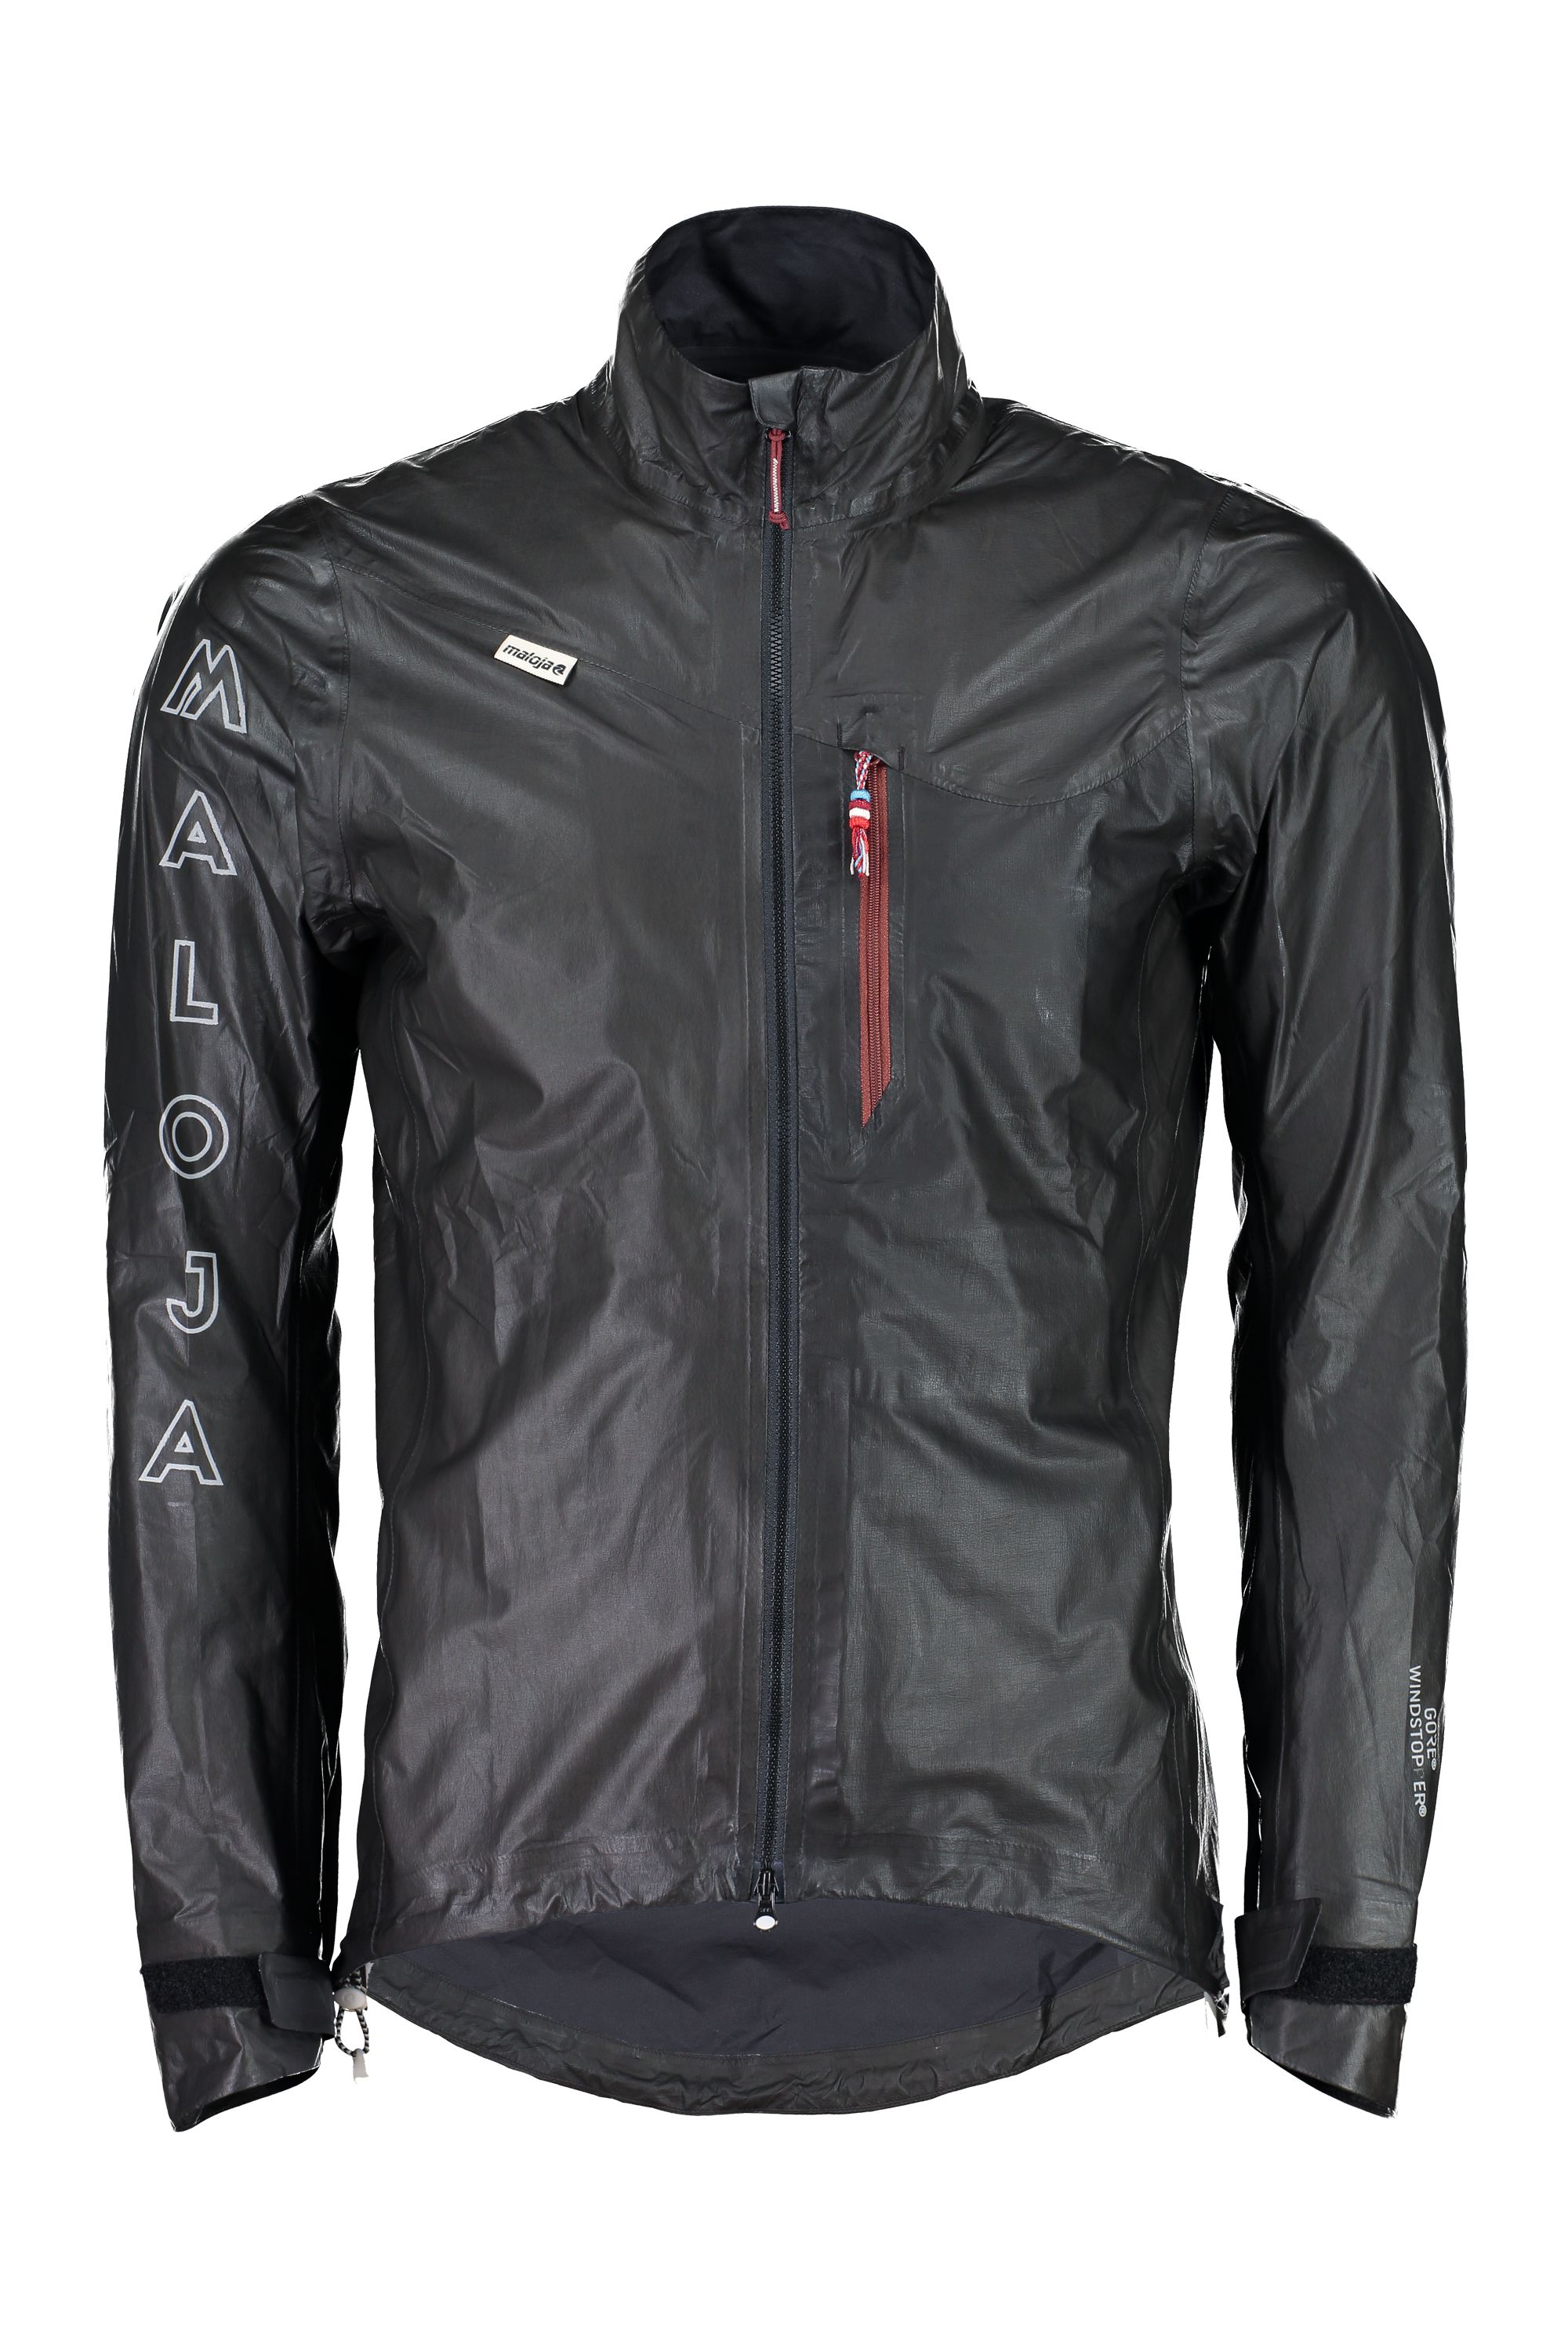 Santic Men Cycling Running Jacket Winter Windproof Warm Breathable Lightweight  Bike Jacke,Black M : Amazon.co.uk: Fashion